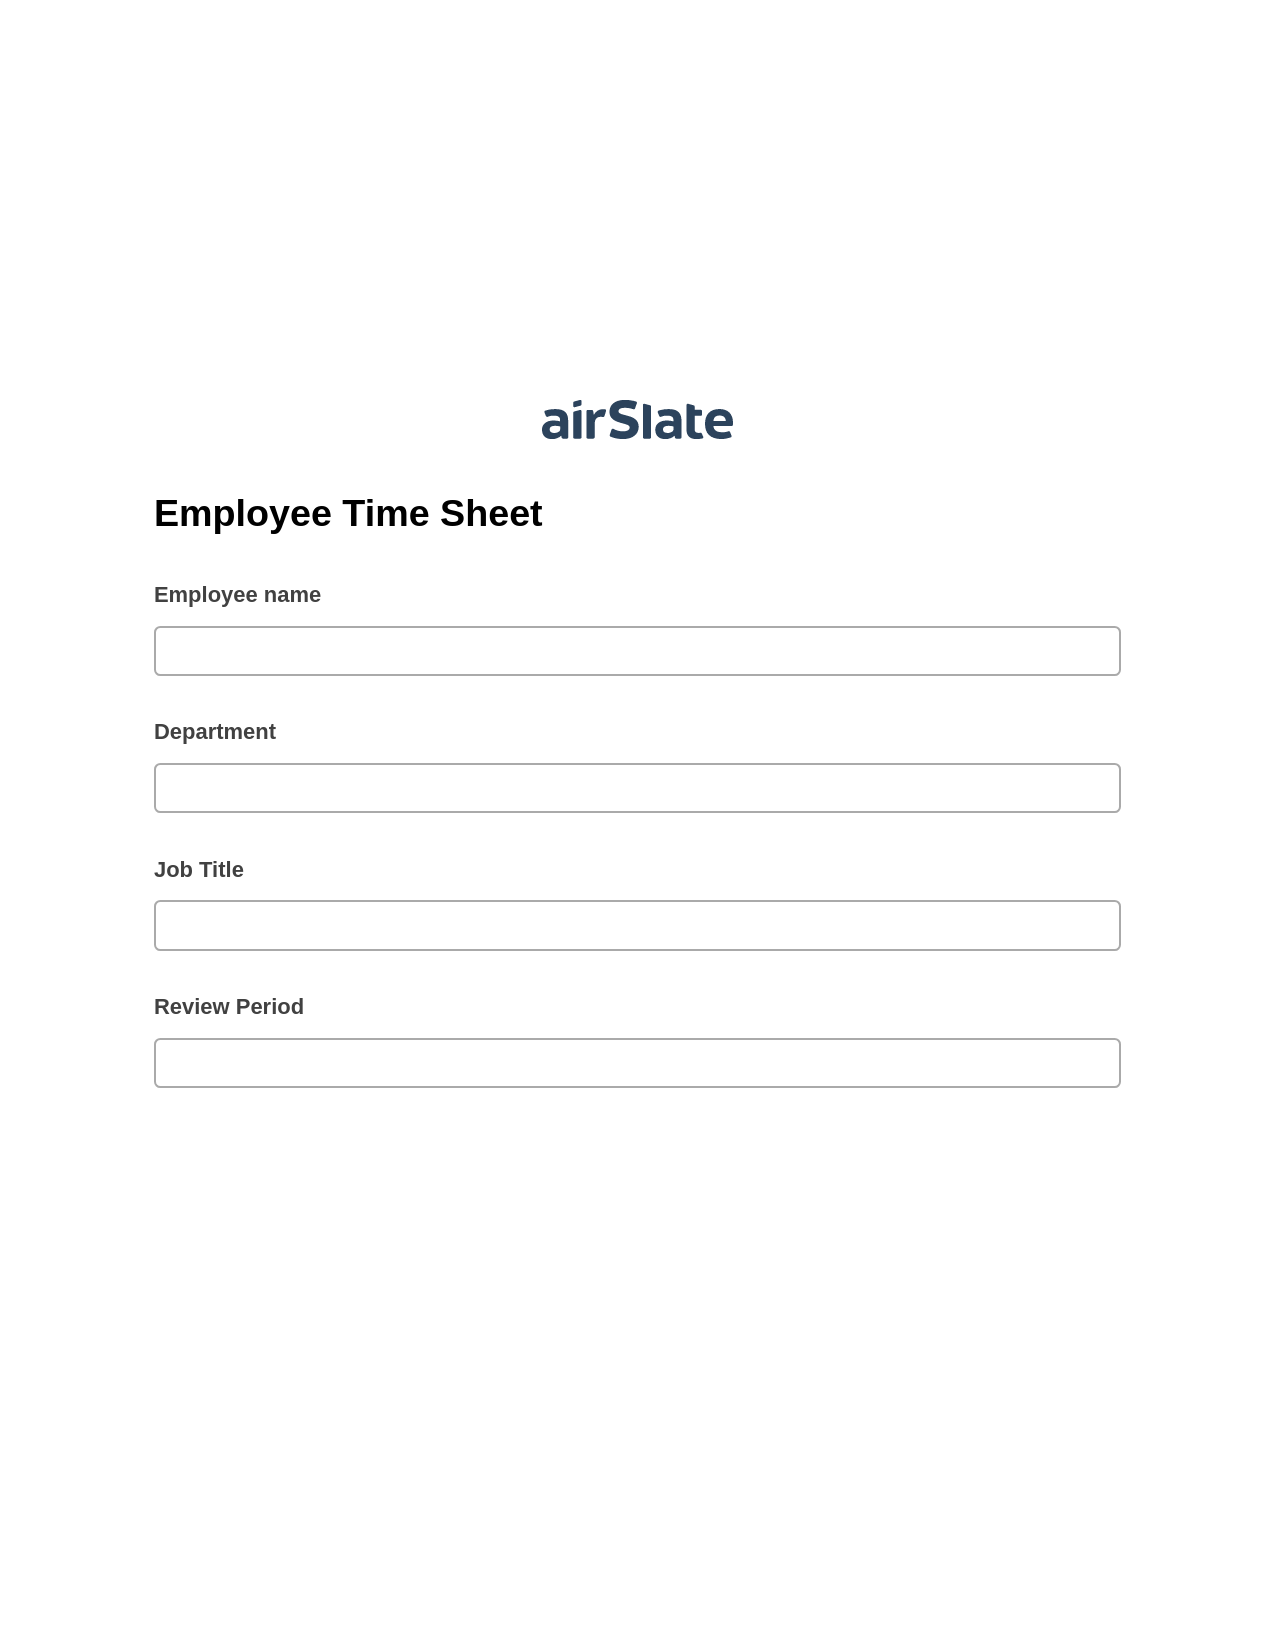 Multirole Employee Time Sheet Pre-fill from CSV File Bot, Update Audit Trail Bot, Post-finish Document Bot